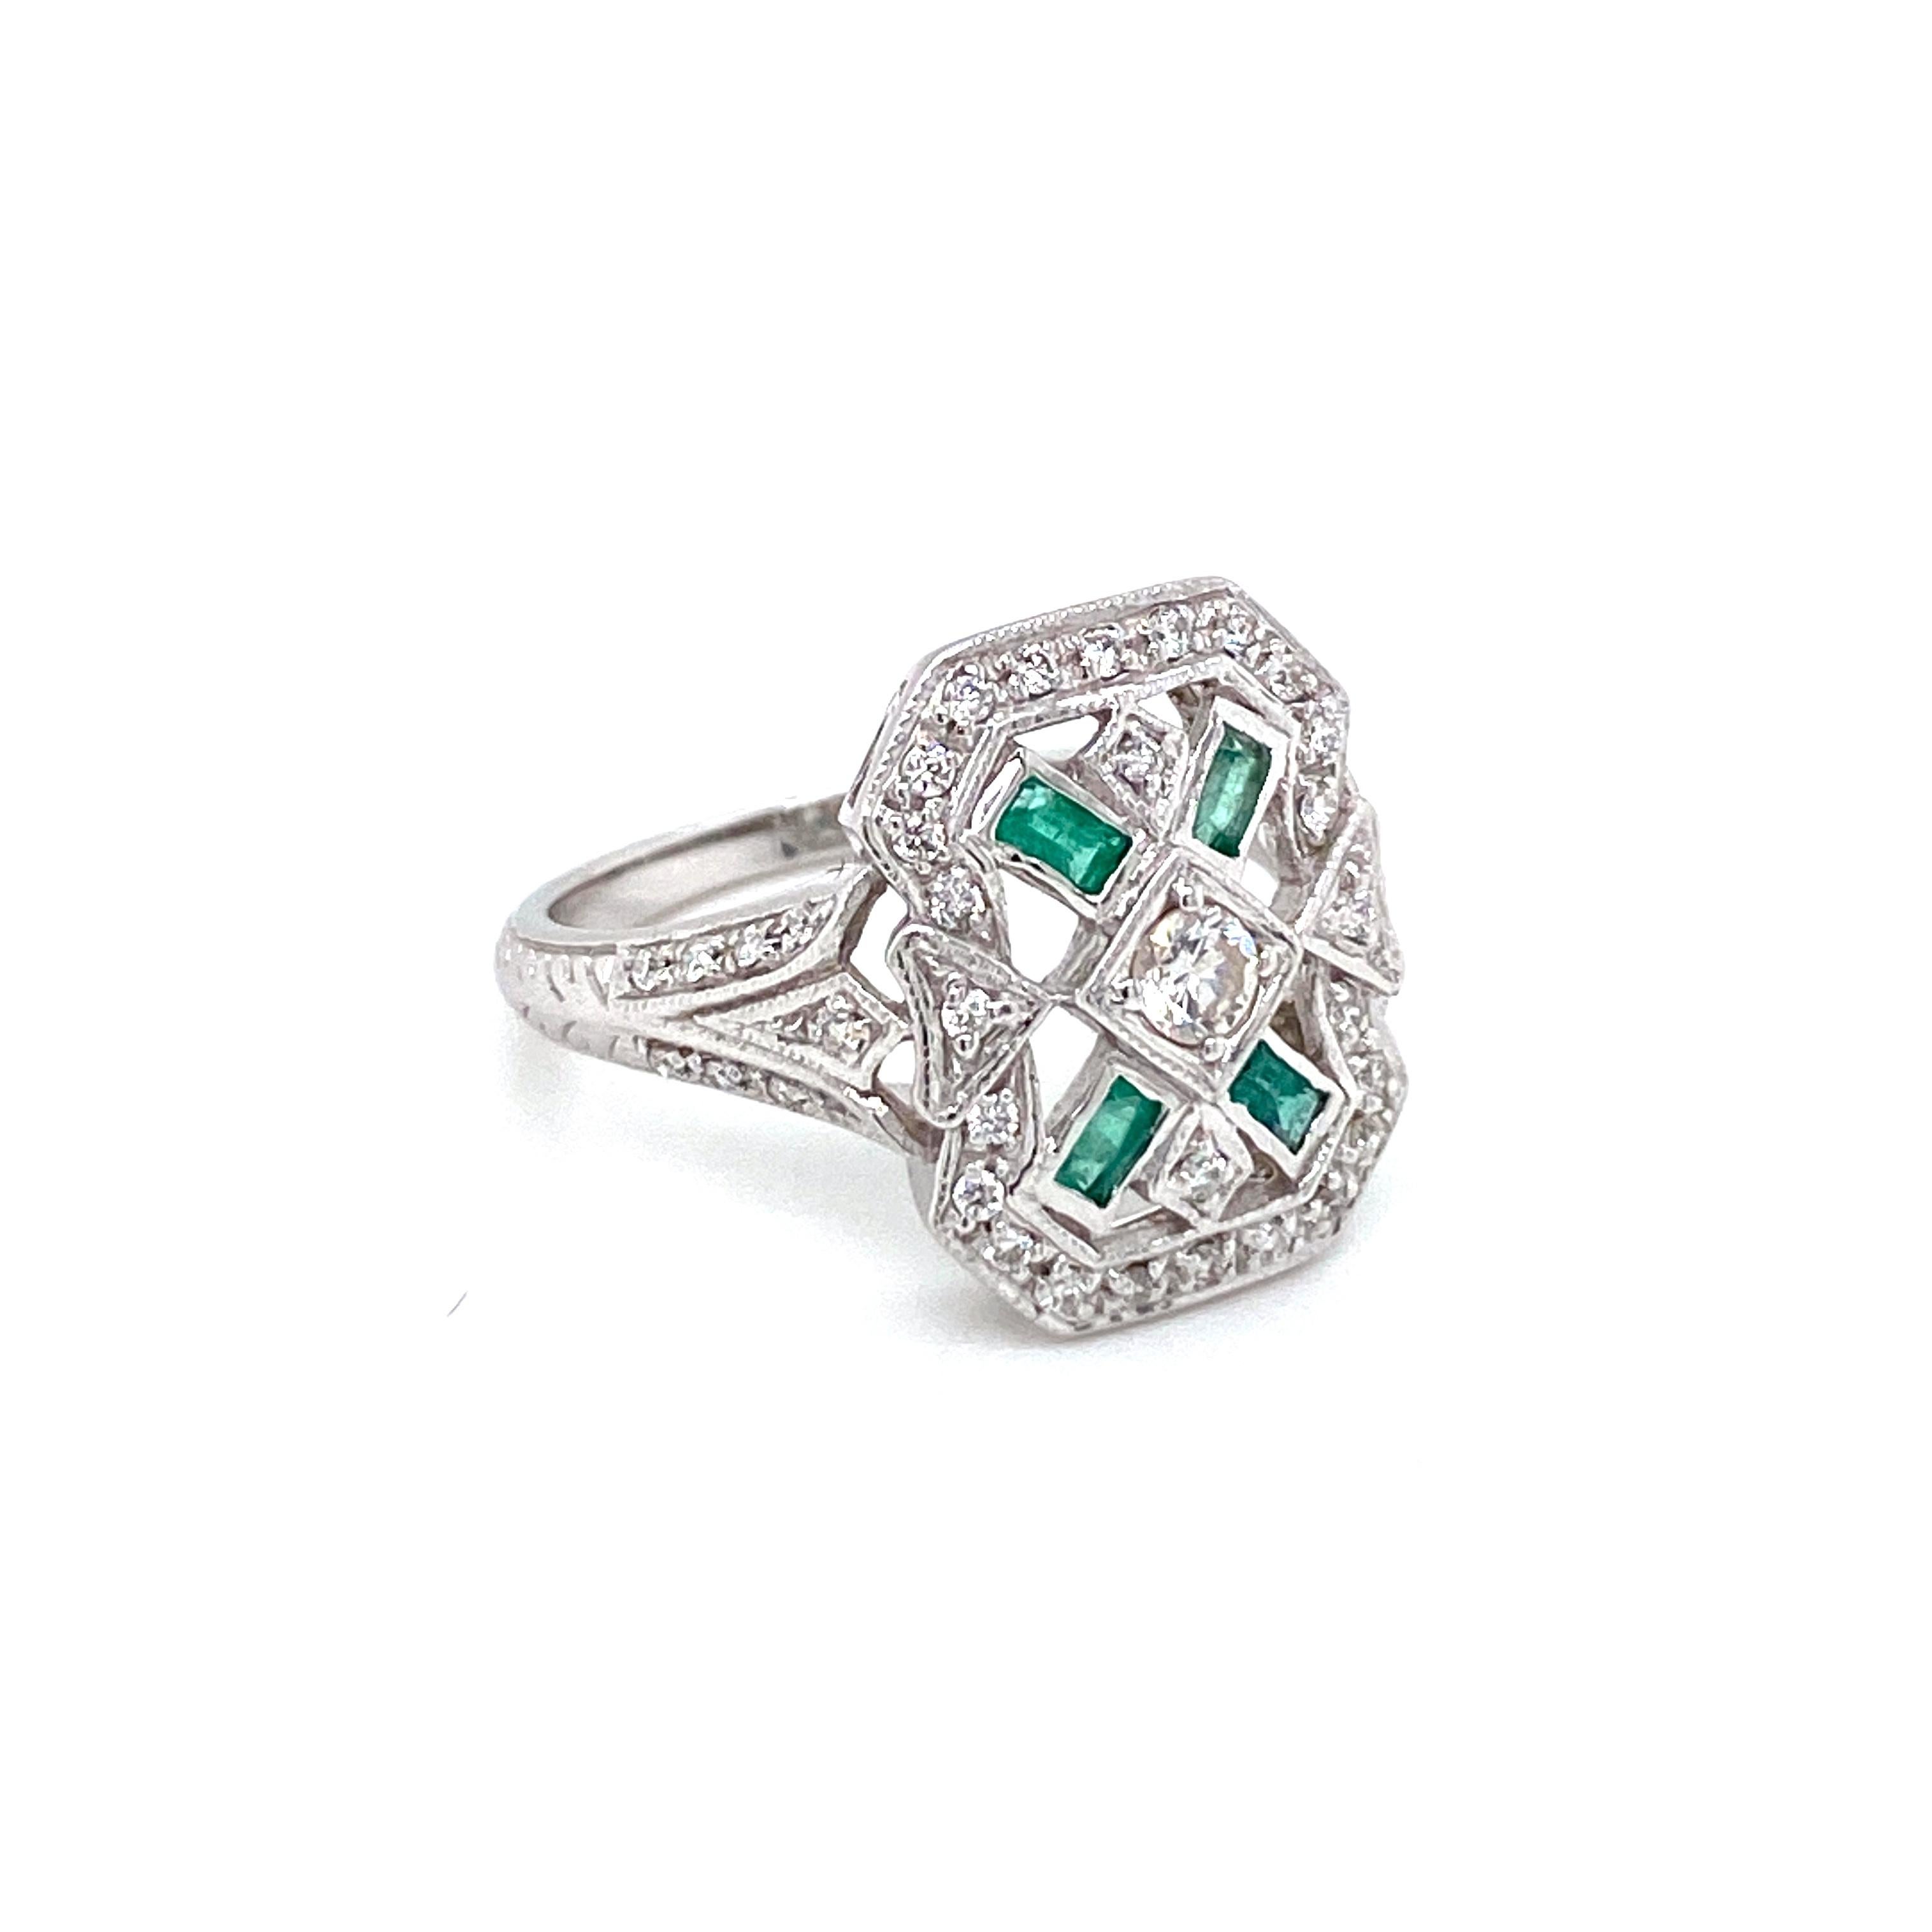 Mixed Cut Art Deco Style Emerald Diamond Engagement Ring